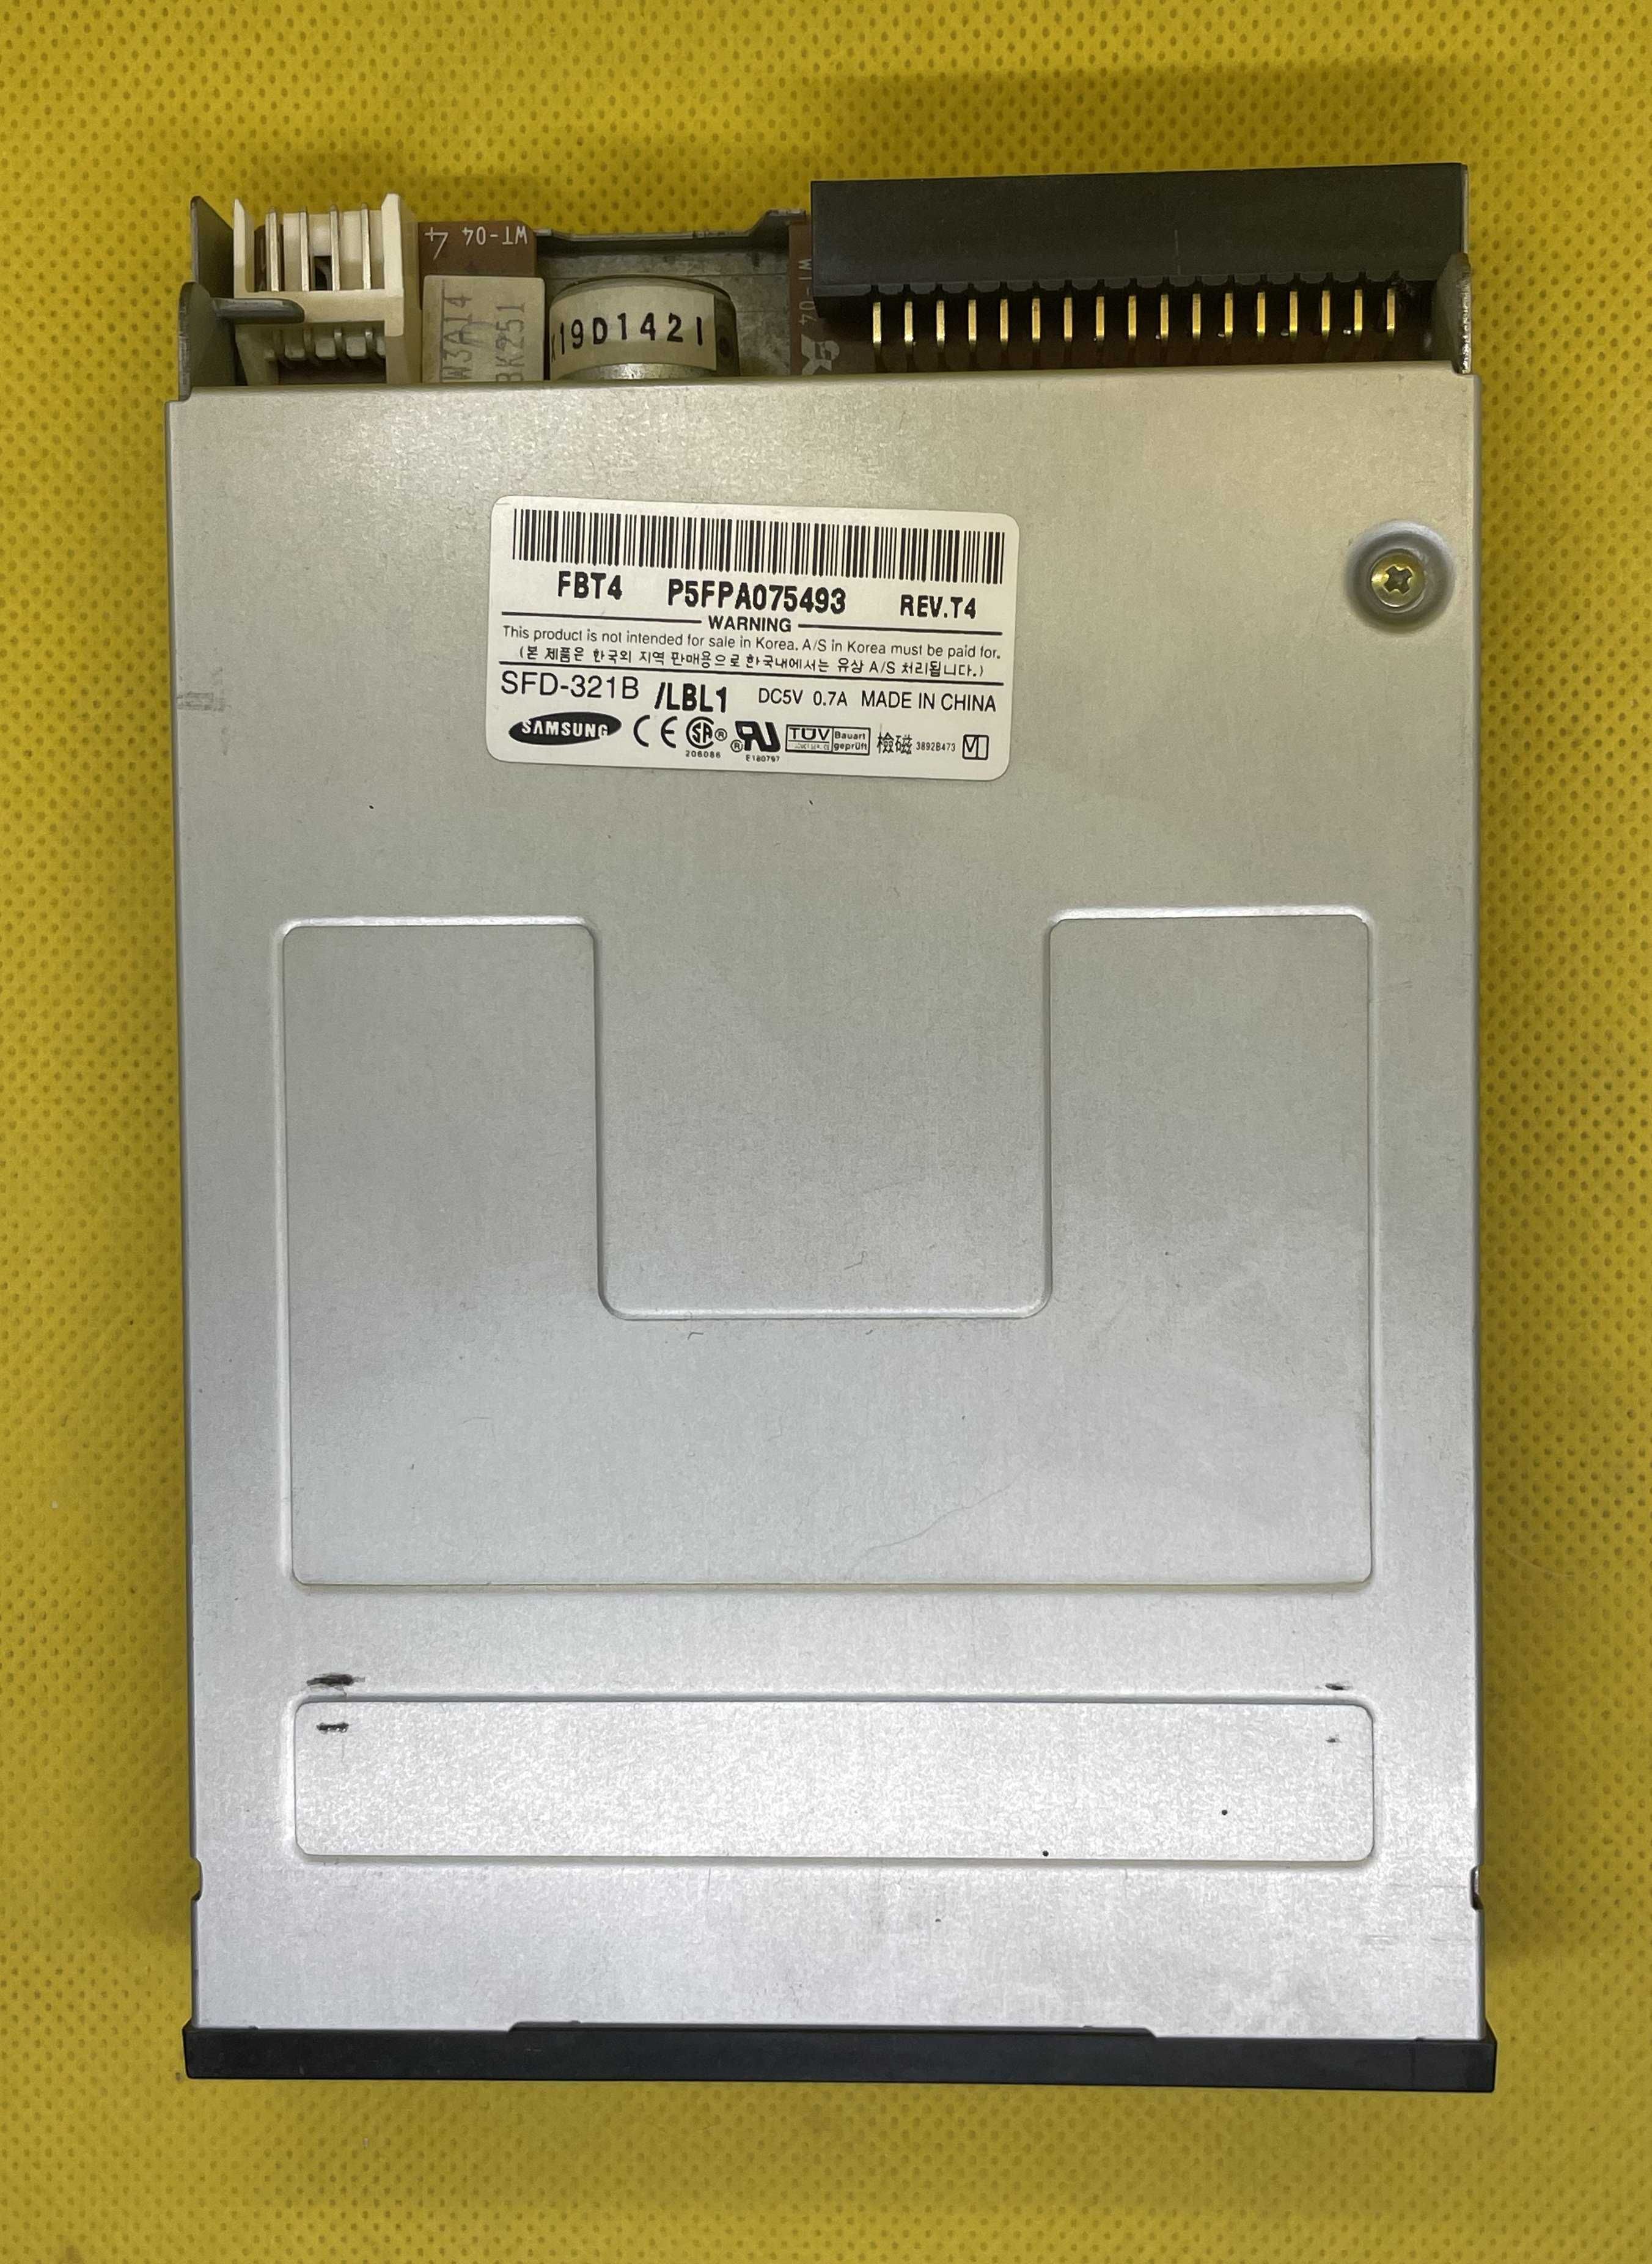 Дисковод FDD floppy disc drive флоппик для дискет 3.5'